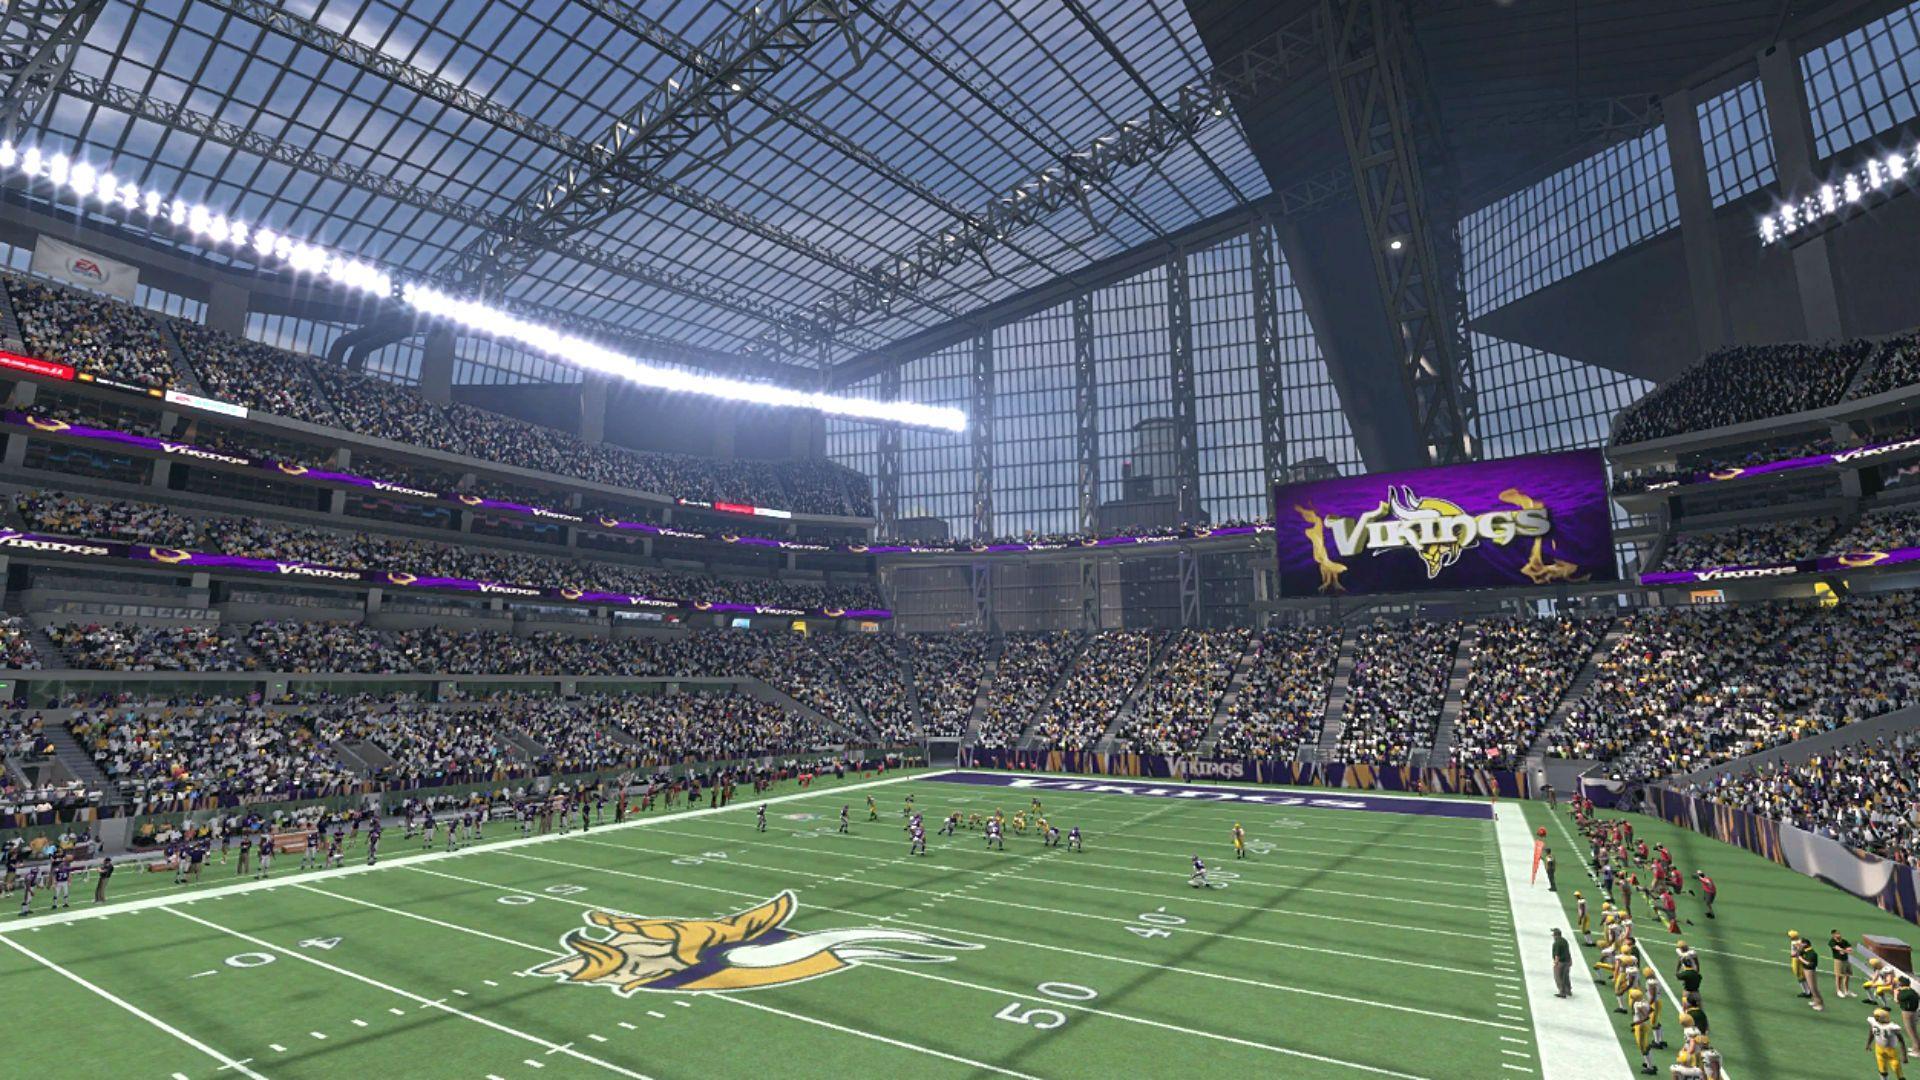 New Vikings stadium, opening next season, debuts in Madden NFL 16